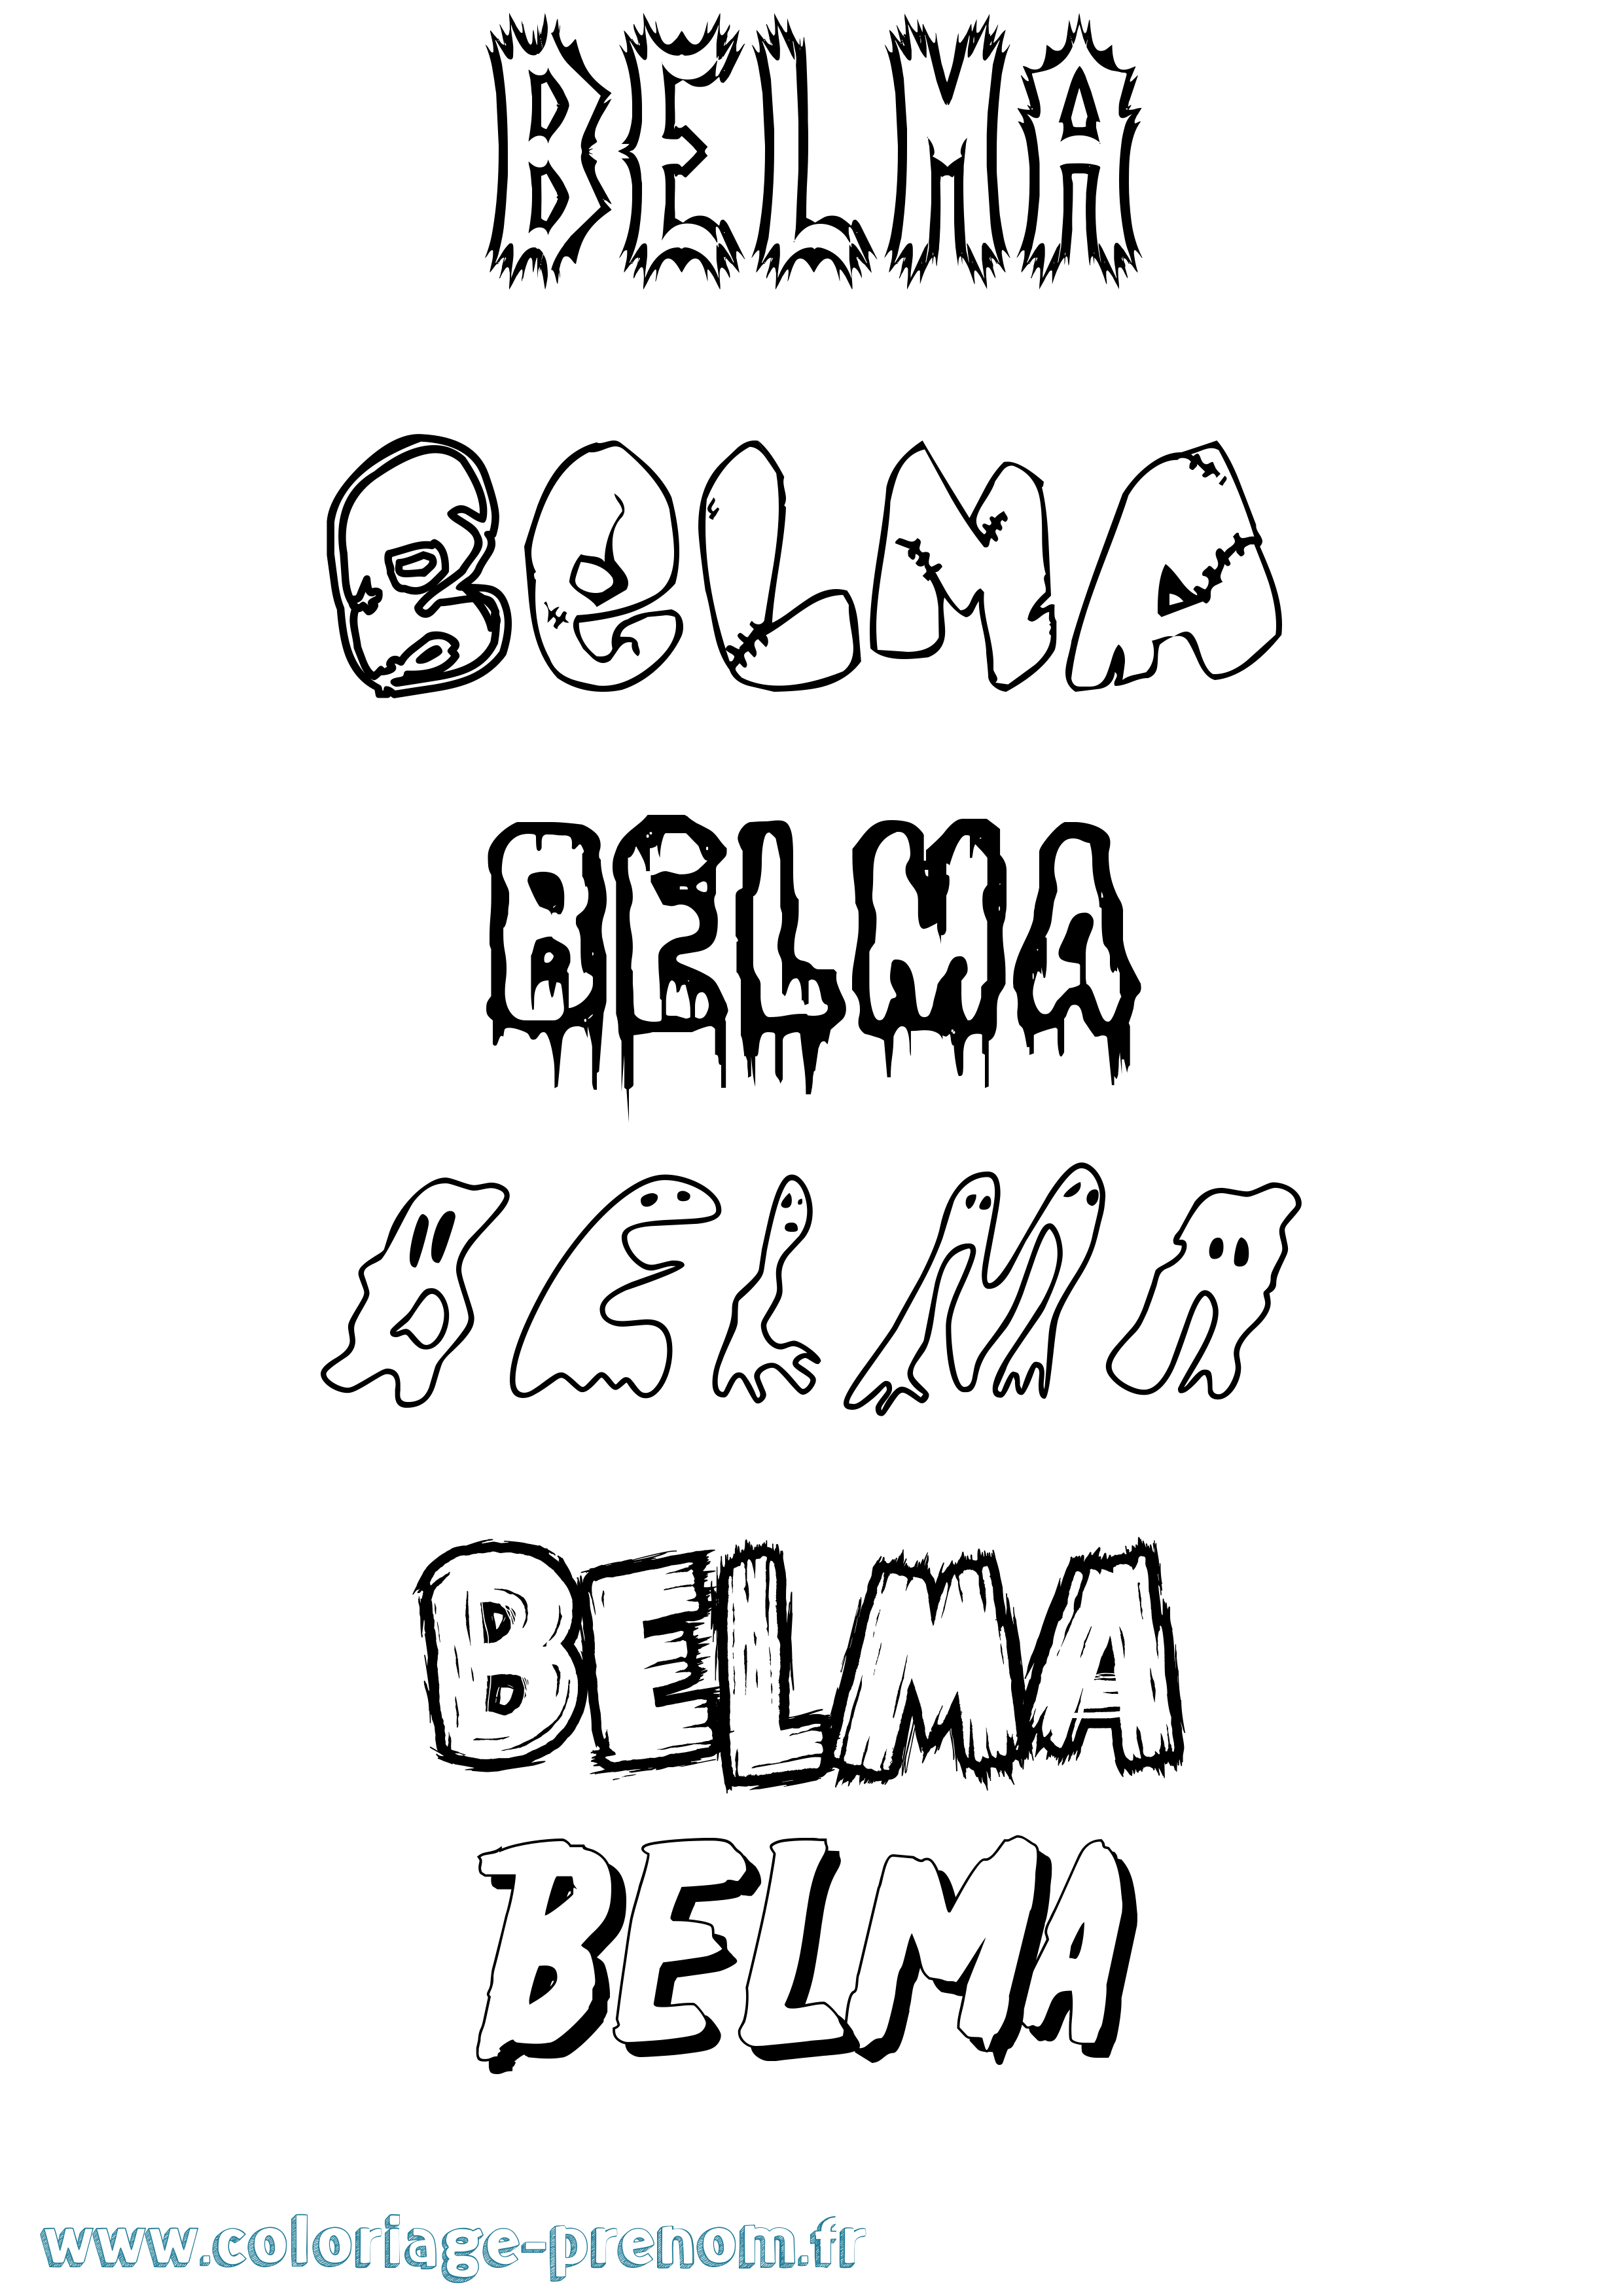 Coloriage prénom Belma Frisson